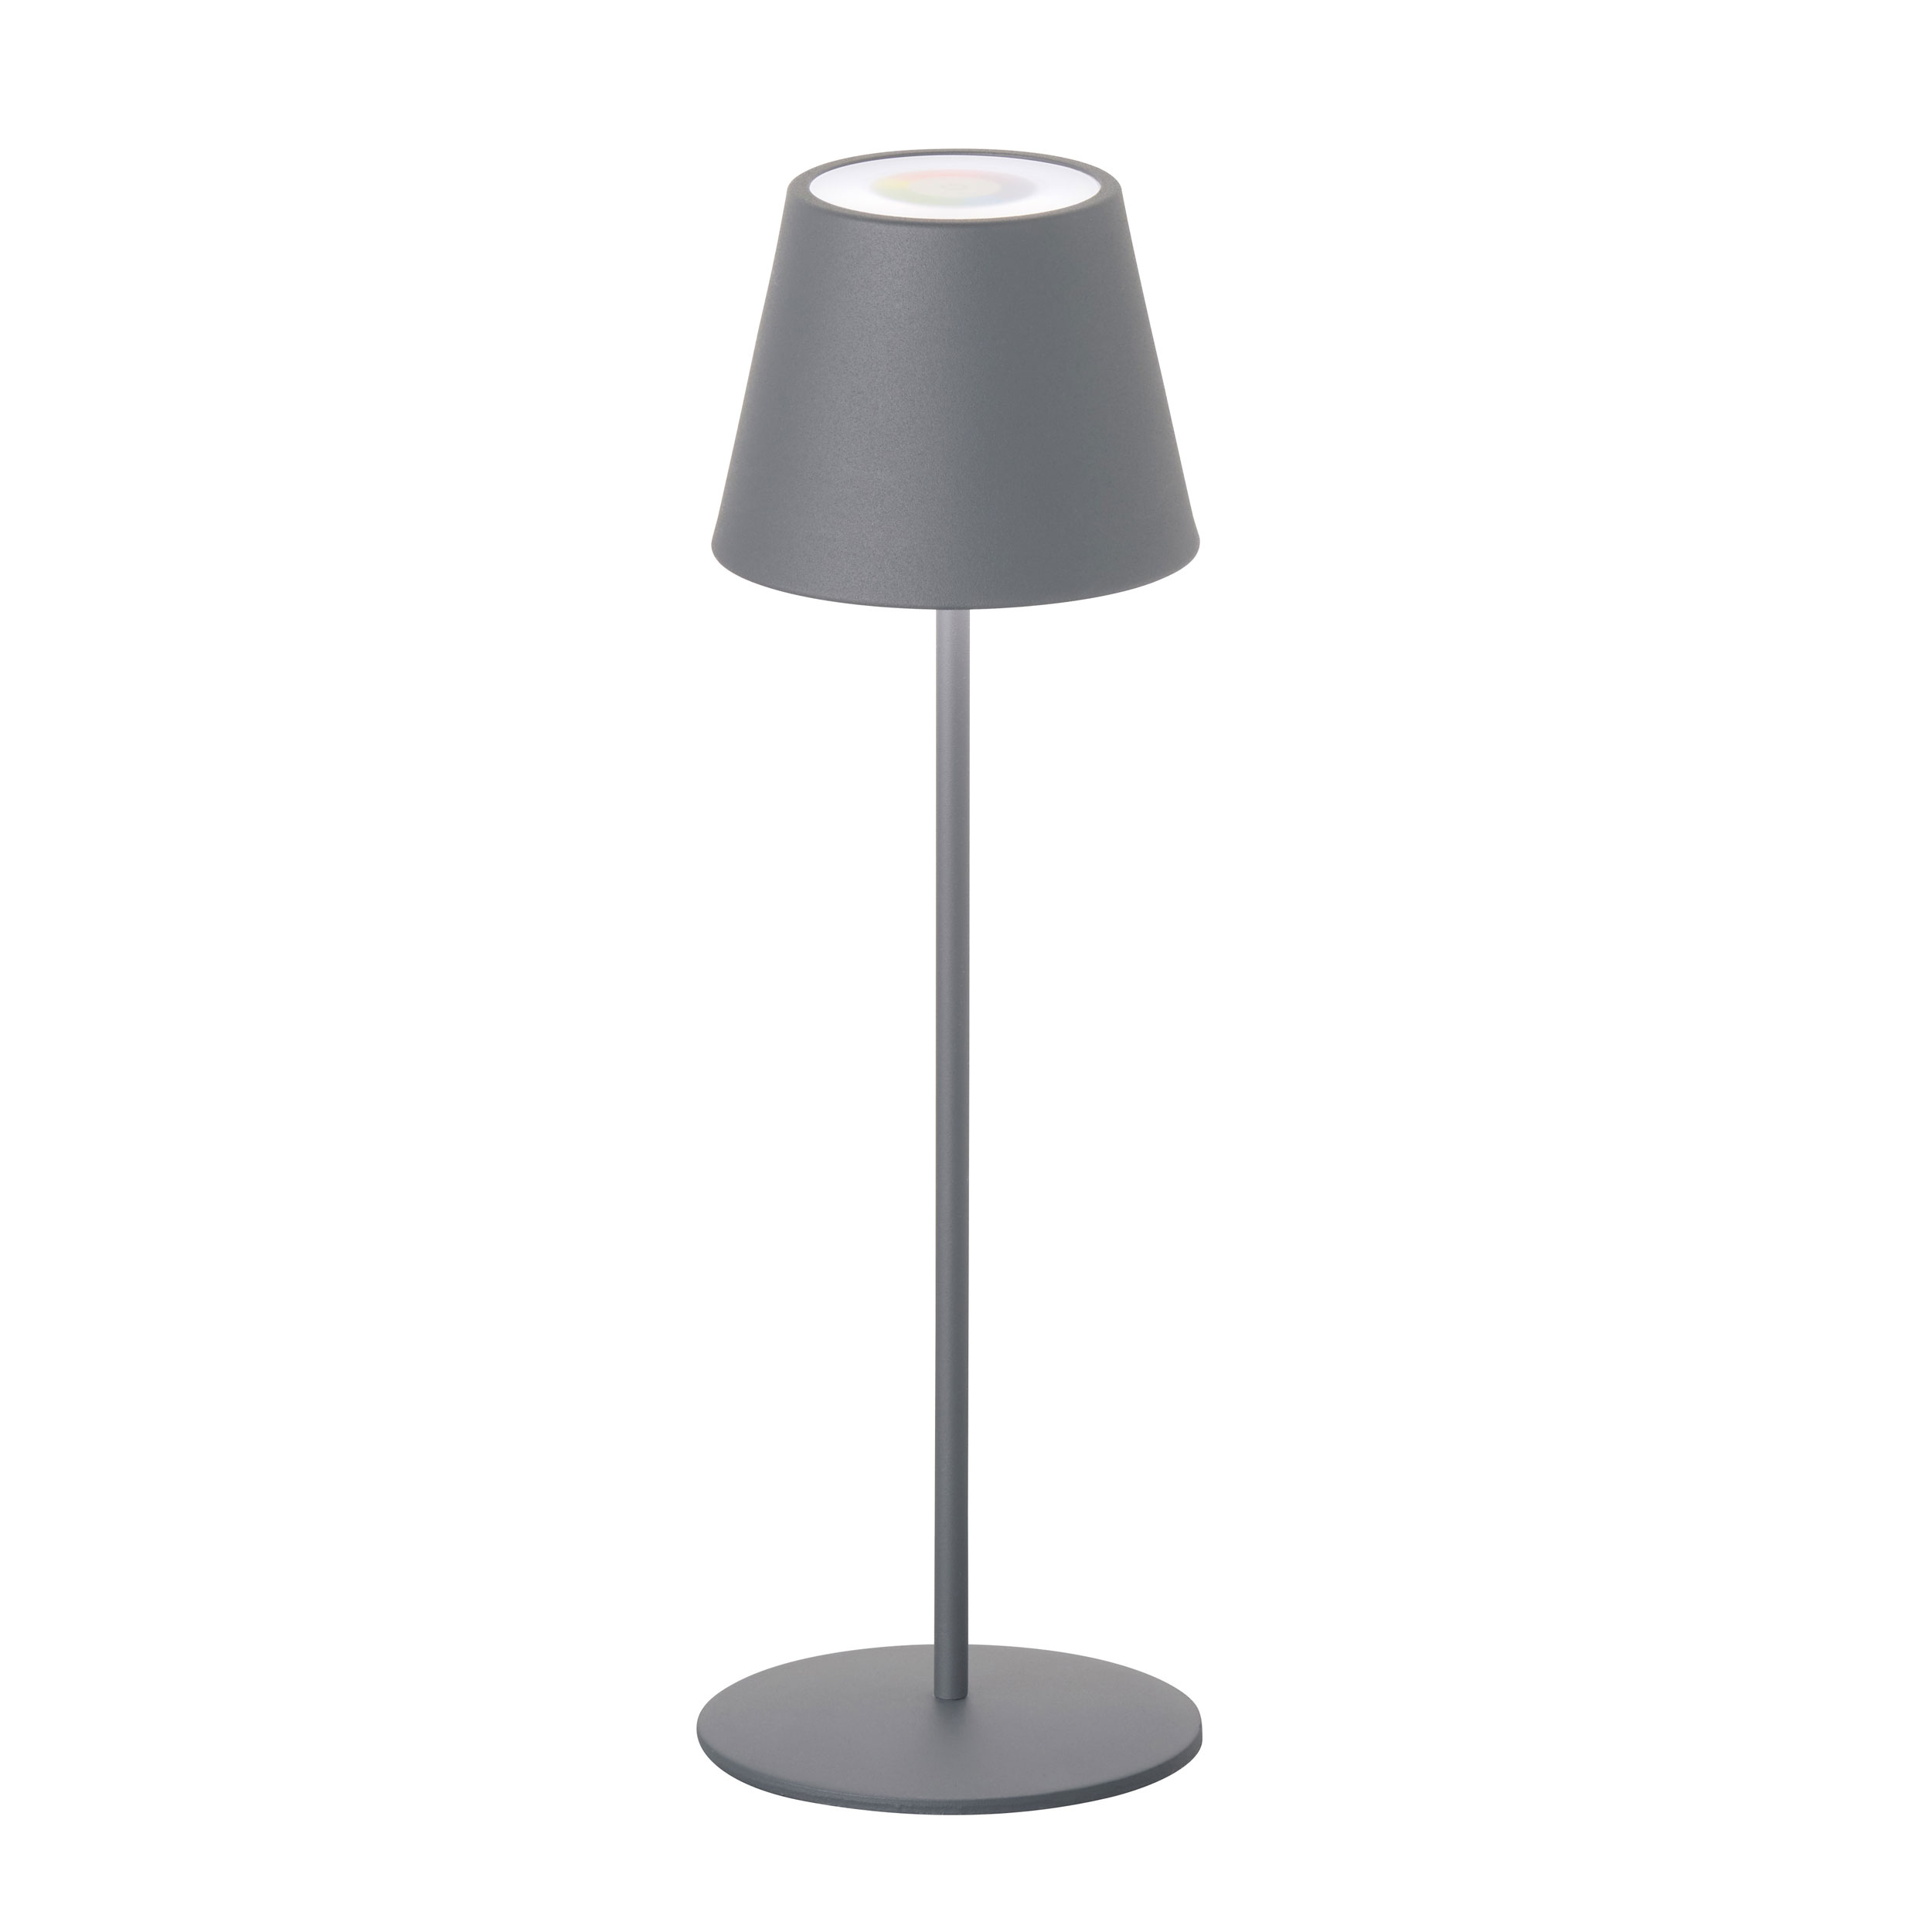 Möbel 1flg FH Onlineshop Schaffrath | LED-Akku-Tischleuchte Lighting